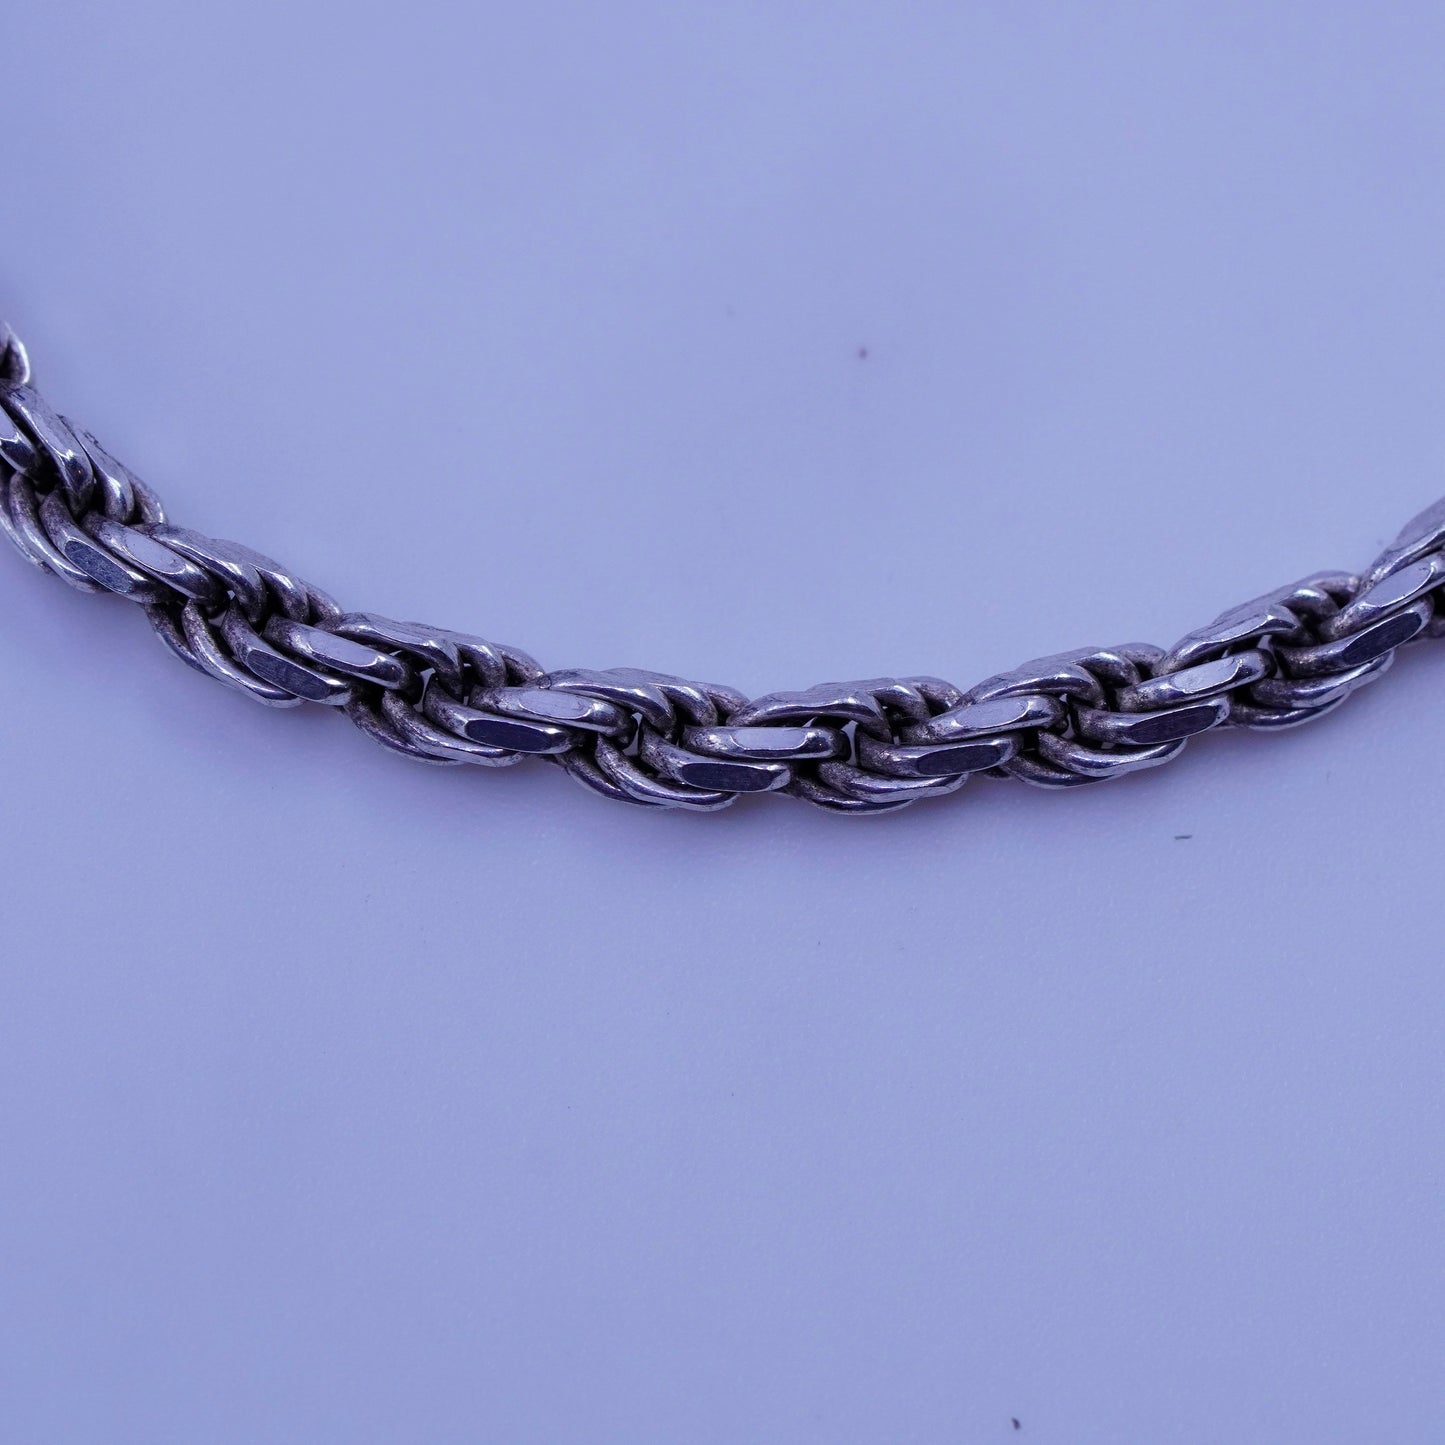 8.25”, 3mm, Vintage Italy Sterling 925 silver handmade bracelet, rope chain